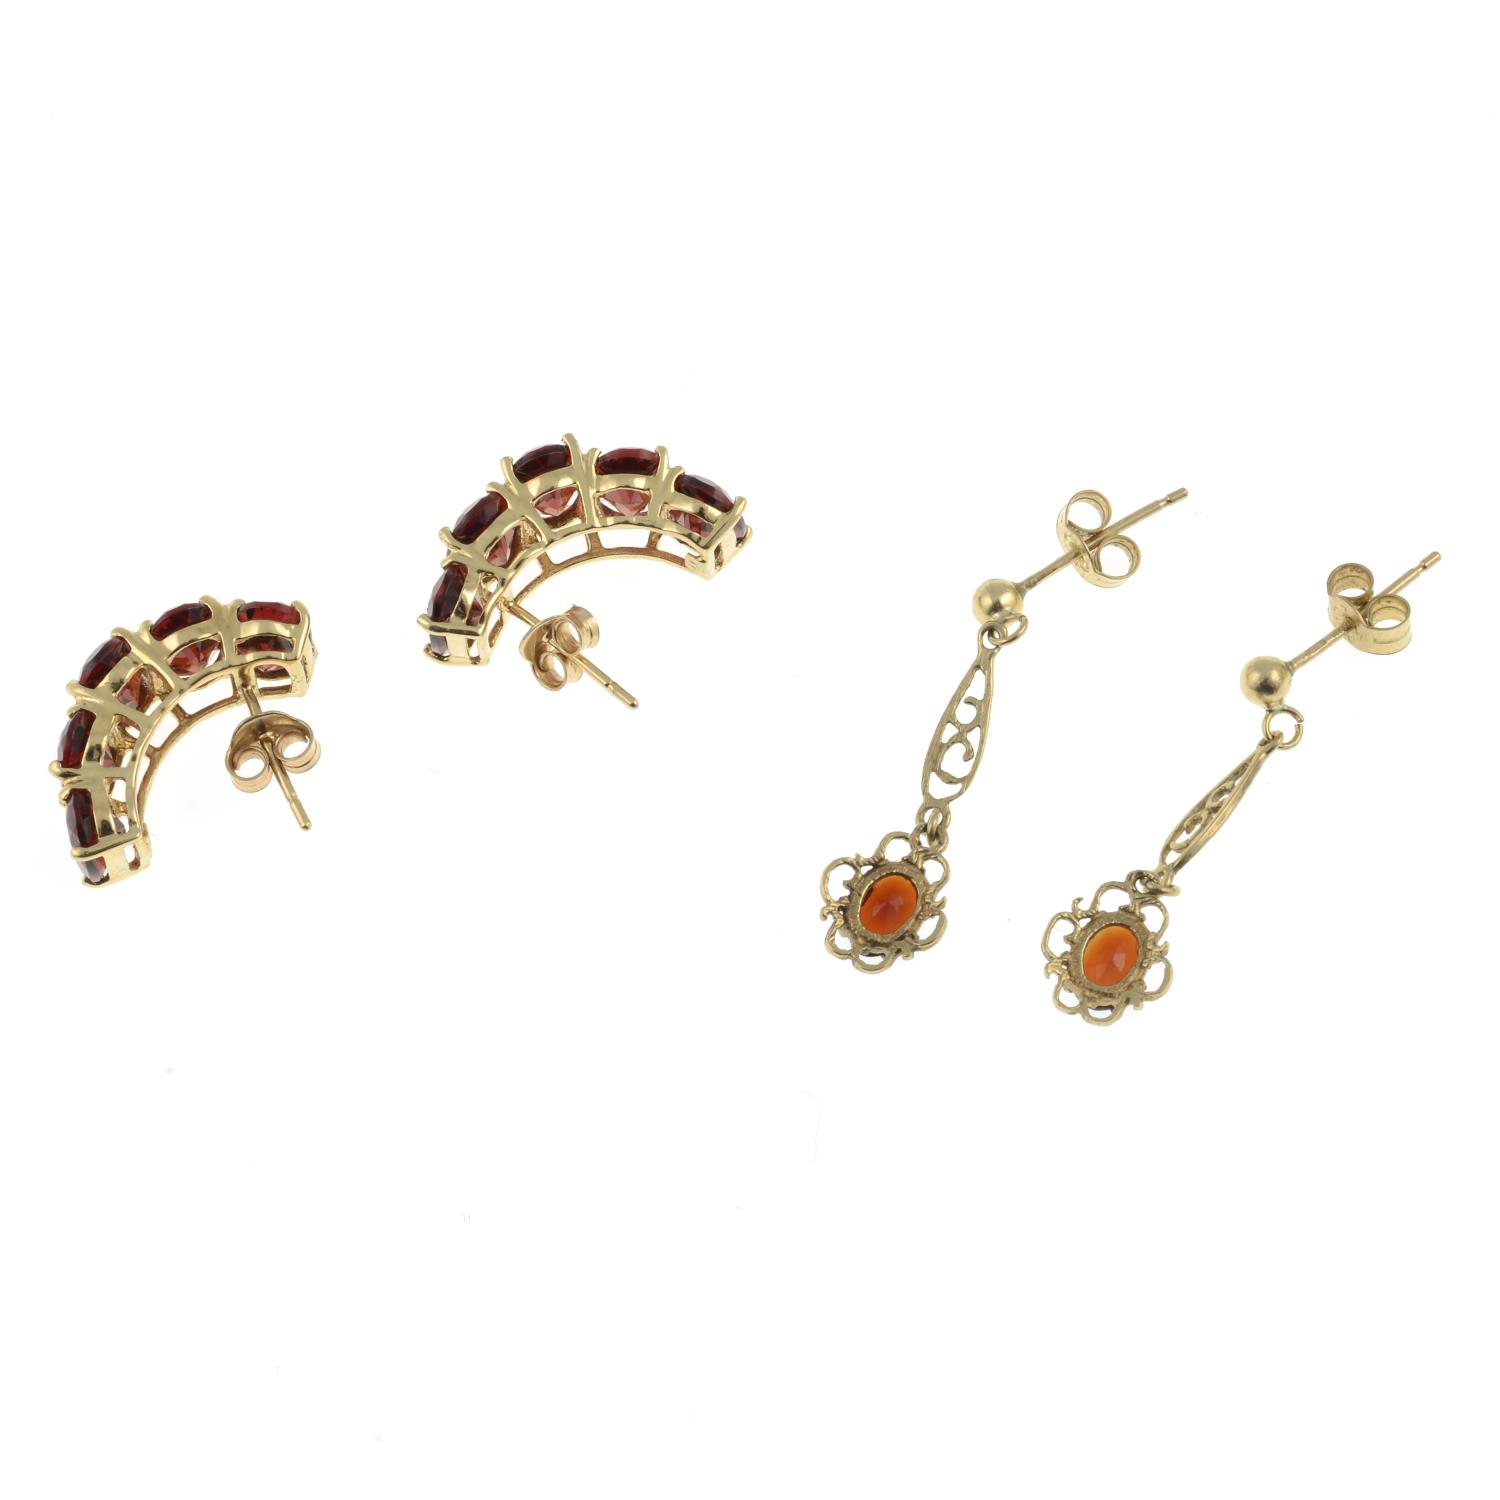 9ct gold garnet drop earrings, - Image 2 of 2